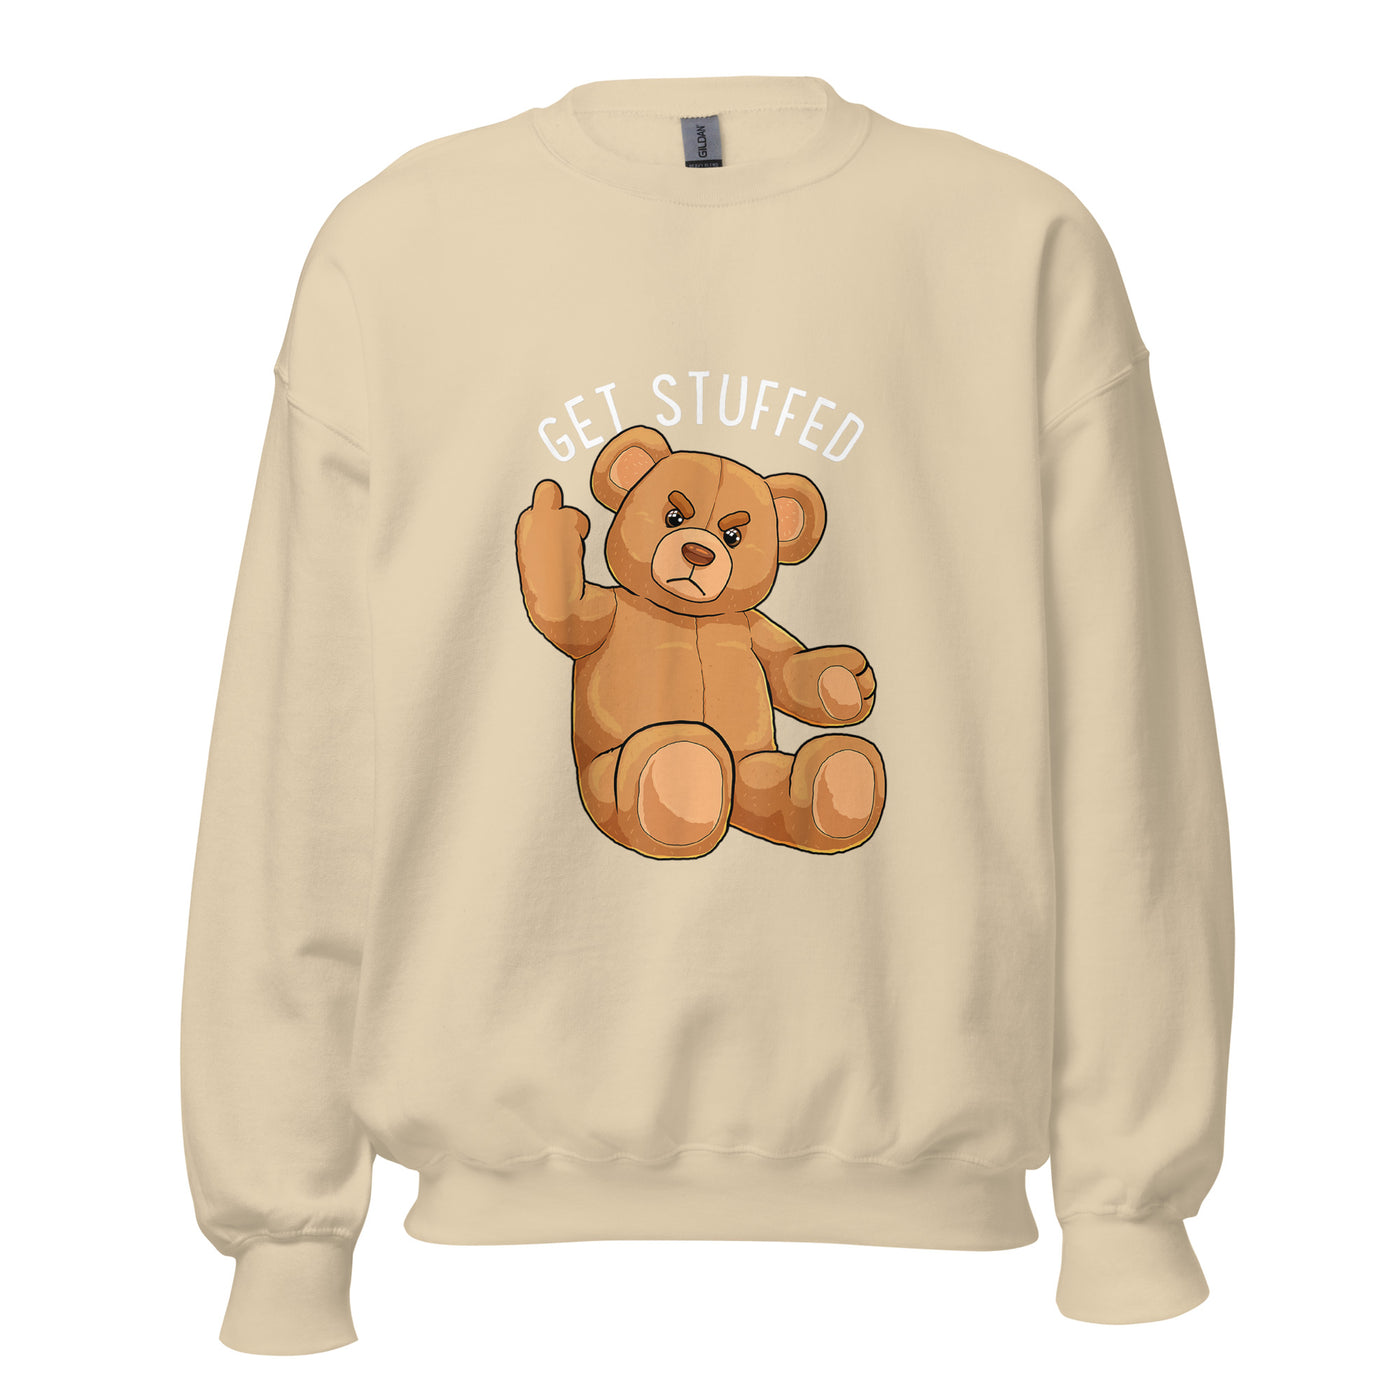 GUT STUFFED TEDDY BEAR Unisex Sweatshirt